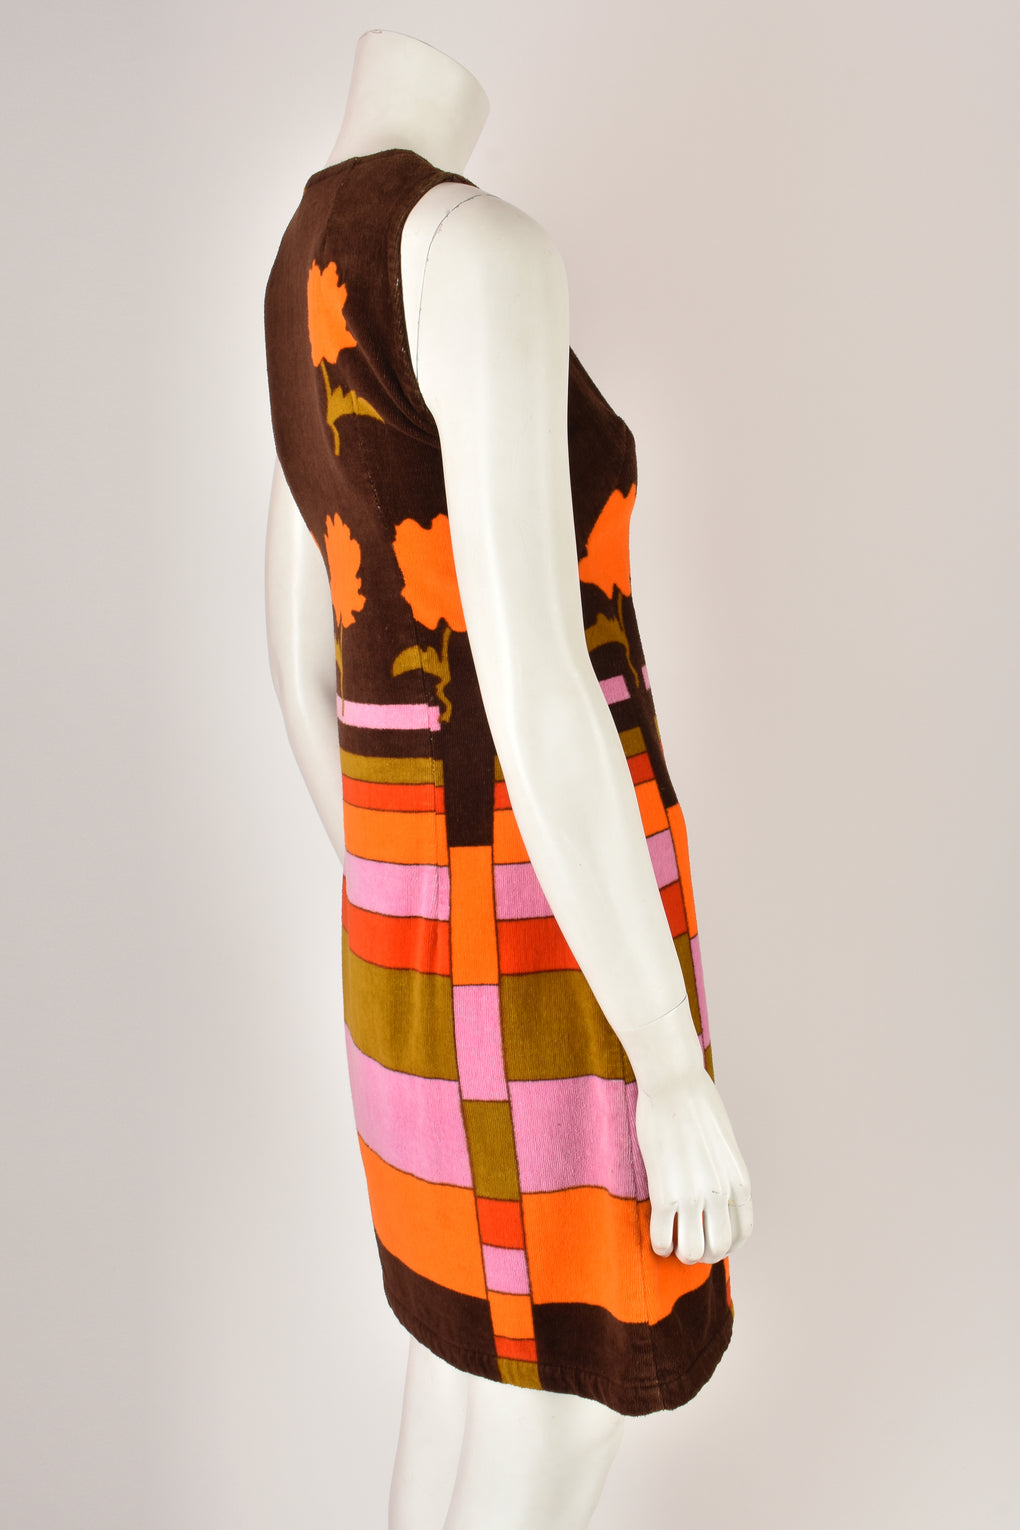 MOVE 1960s towelling geometric print dress XS